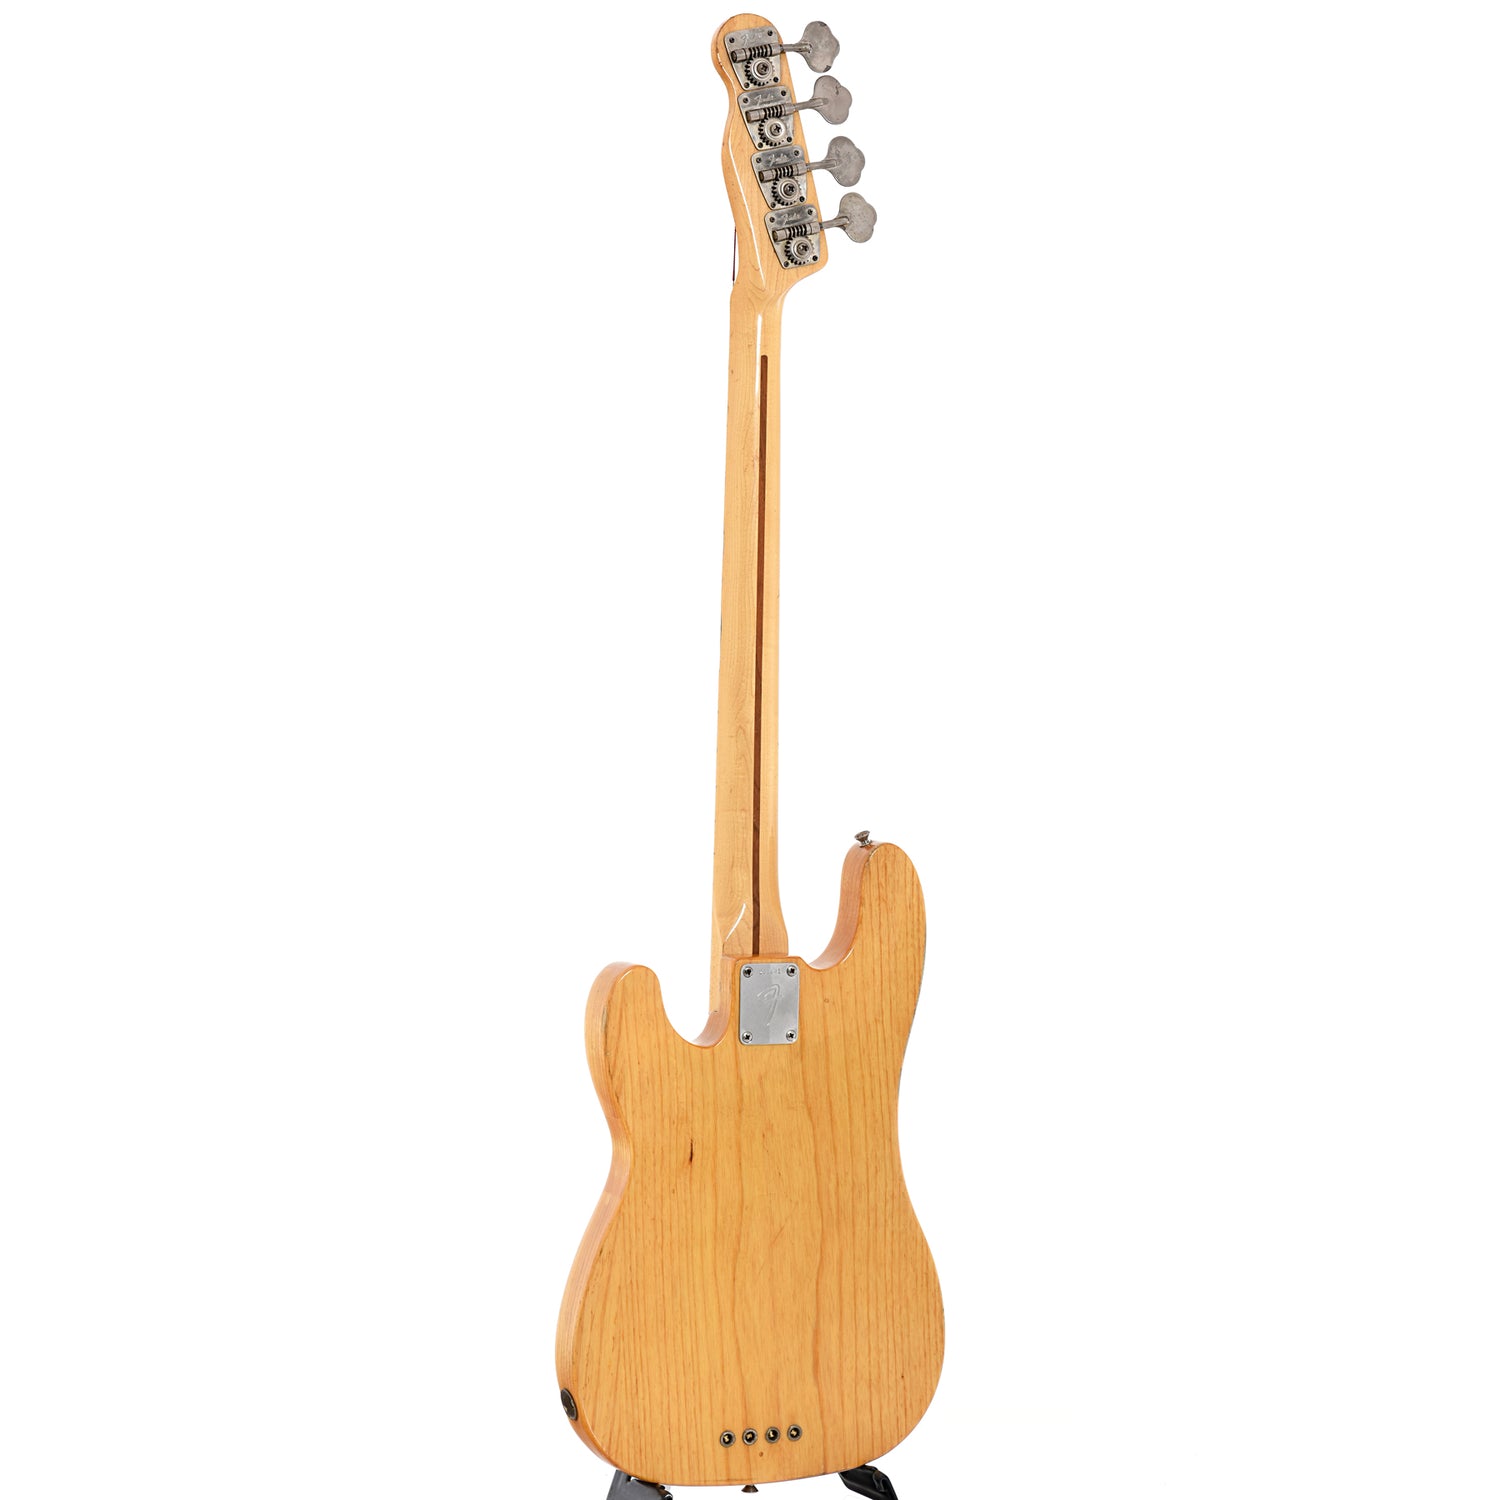 Full back and side of Fender Telecaster Bass 